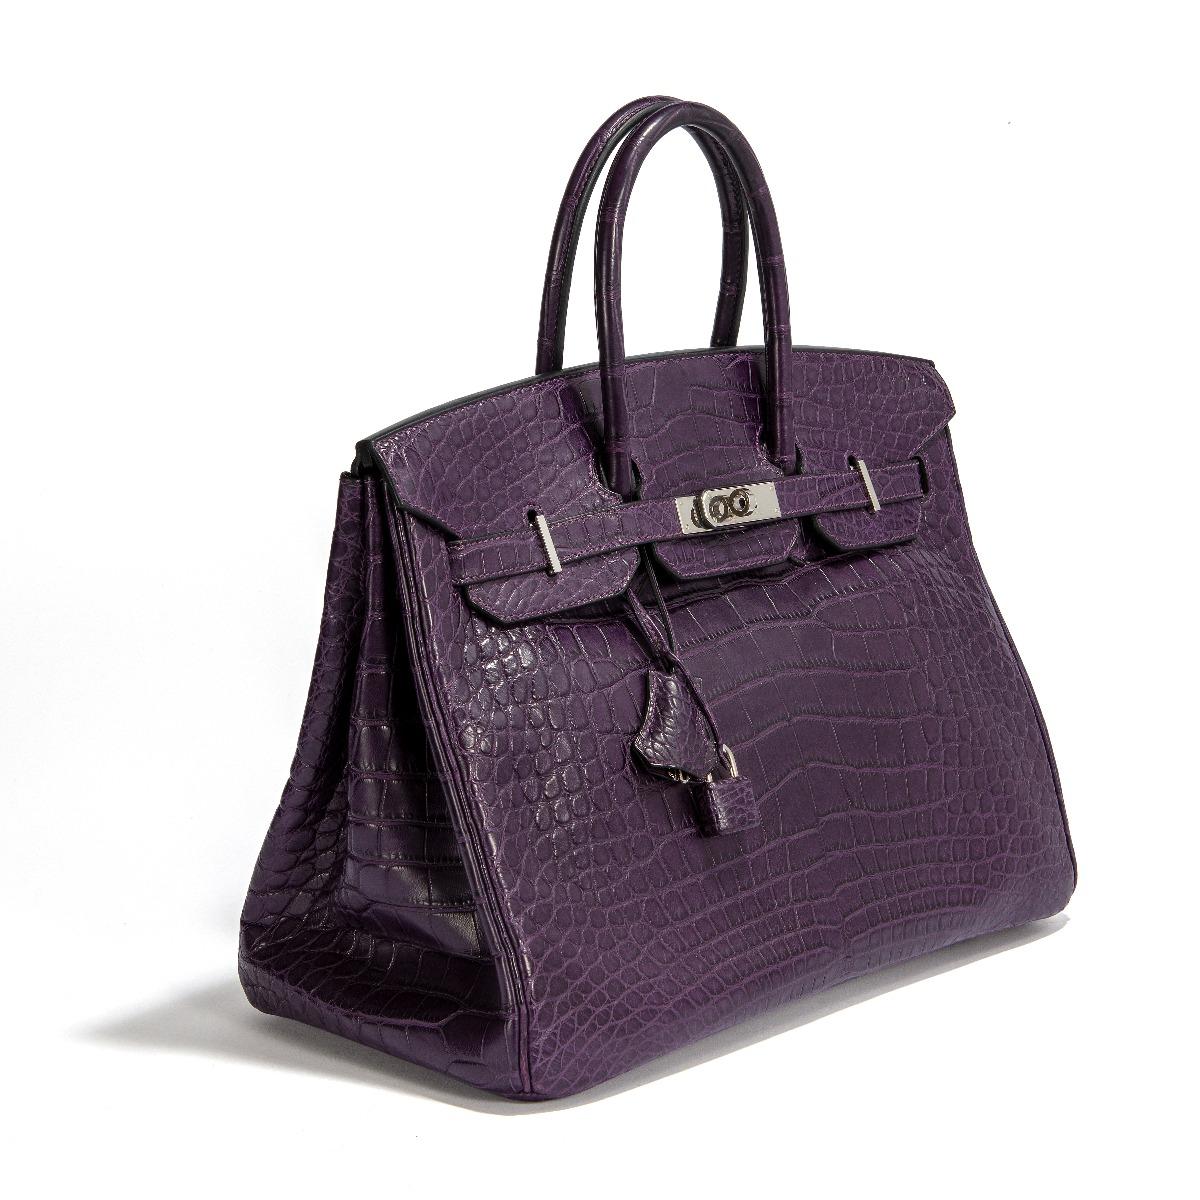 Hermès Birkin Bag Porosus 35 For Sale 1